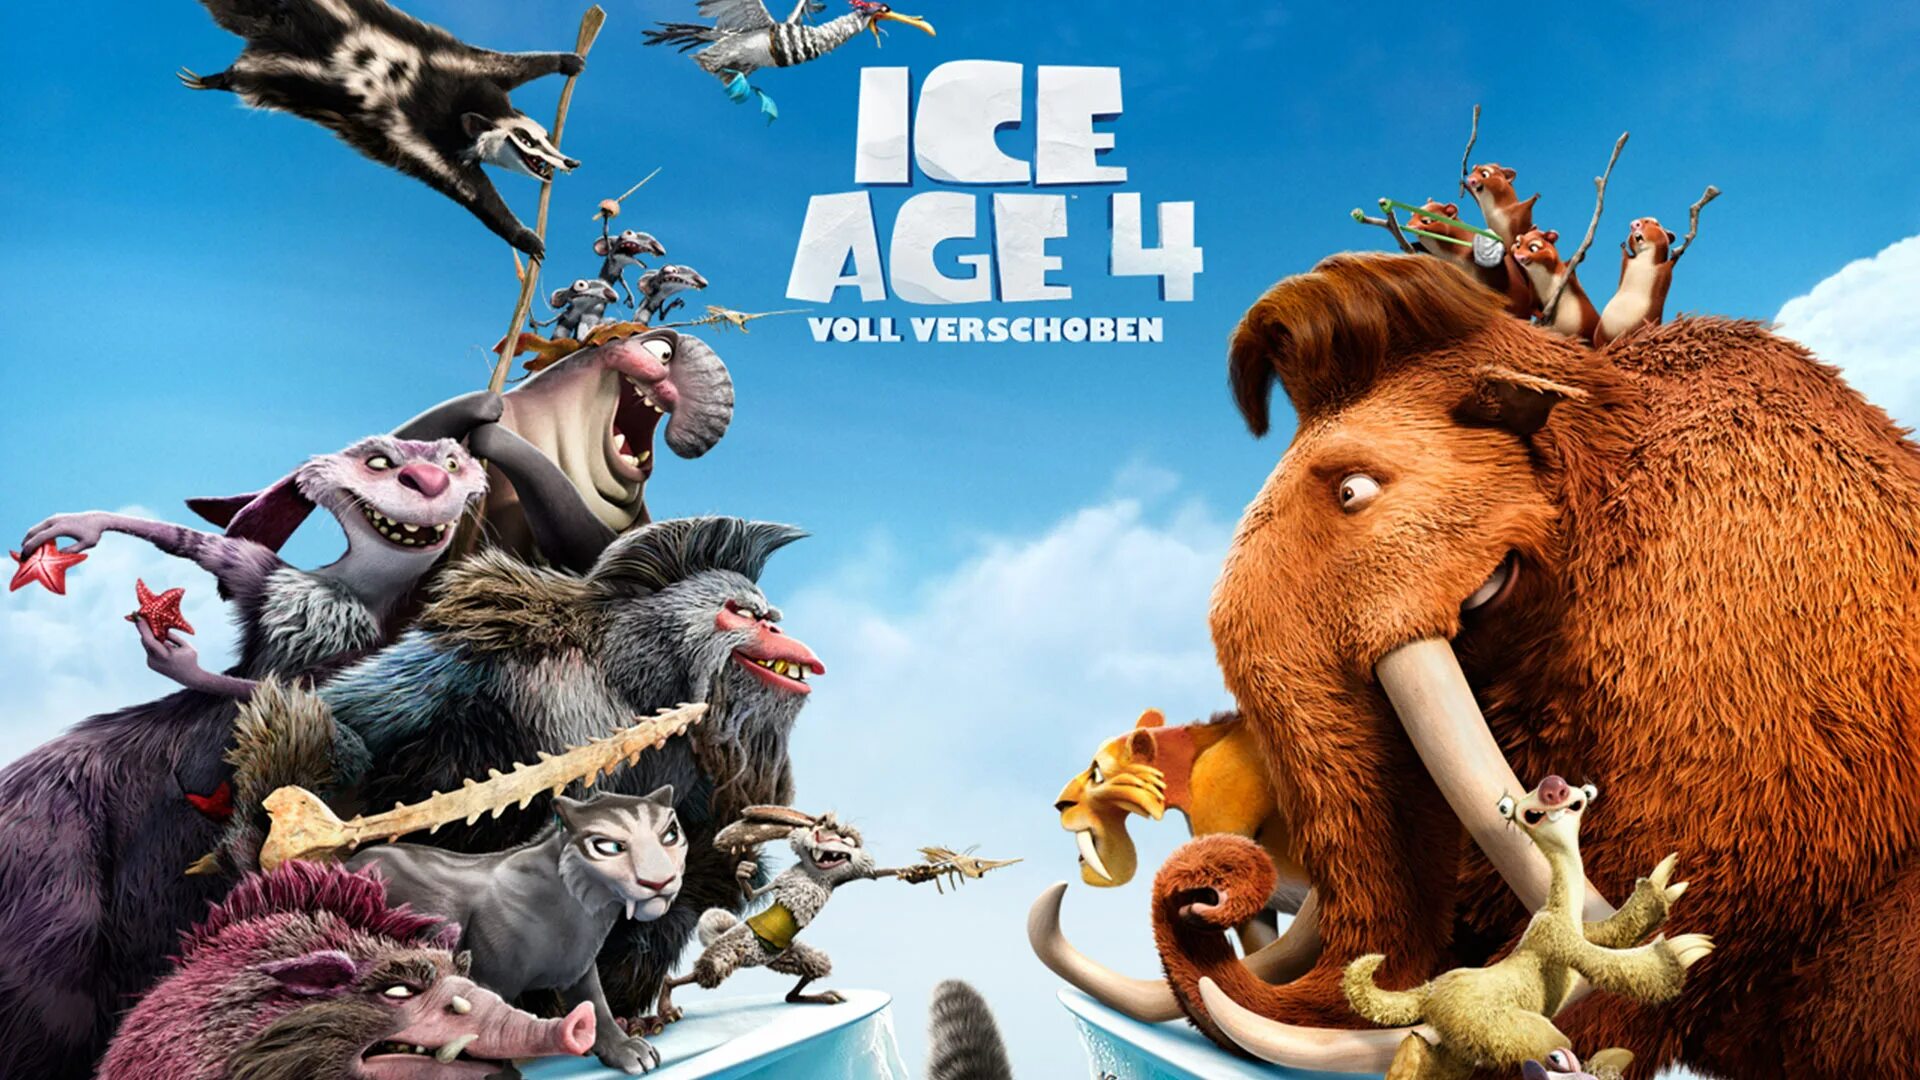 Ice age 4. Ice age: Continental Drift (2012). Ледниковый период 4 континентальный дрейф. Ice age 4 игра.